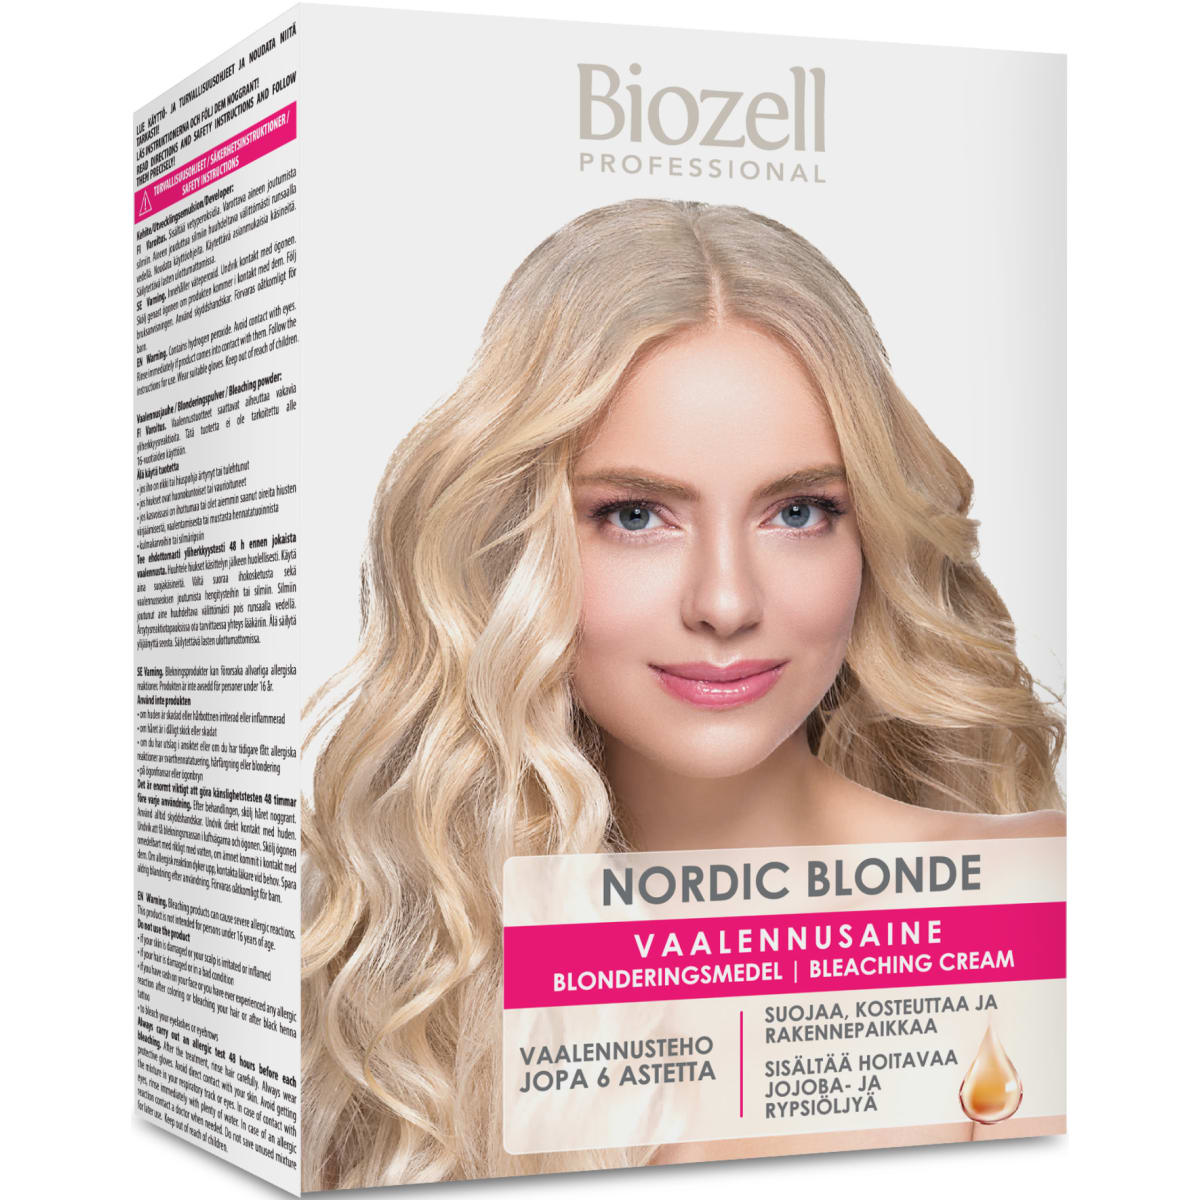 Biozell Professional Nordic Blonde vaalennusaine   verkkokauppa